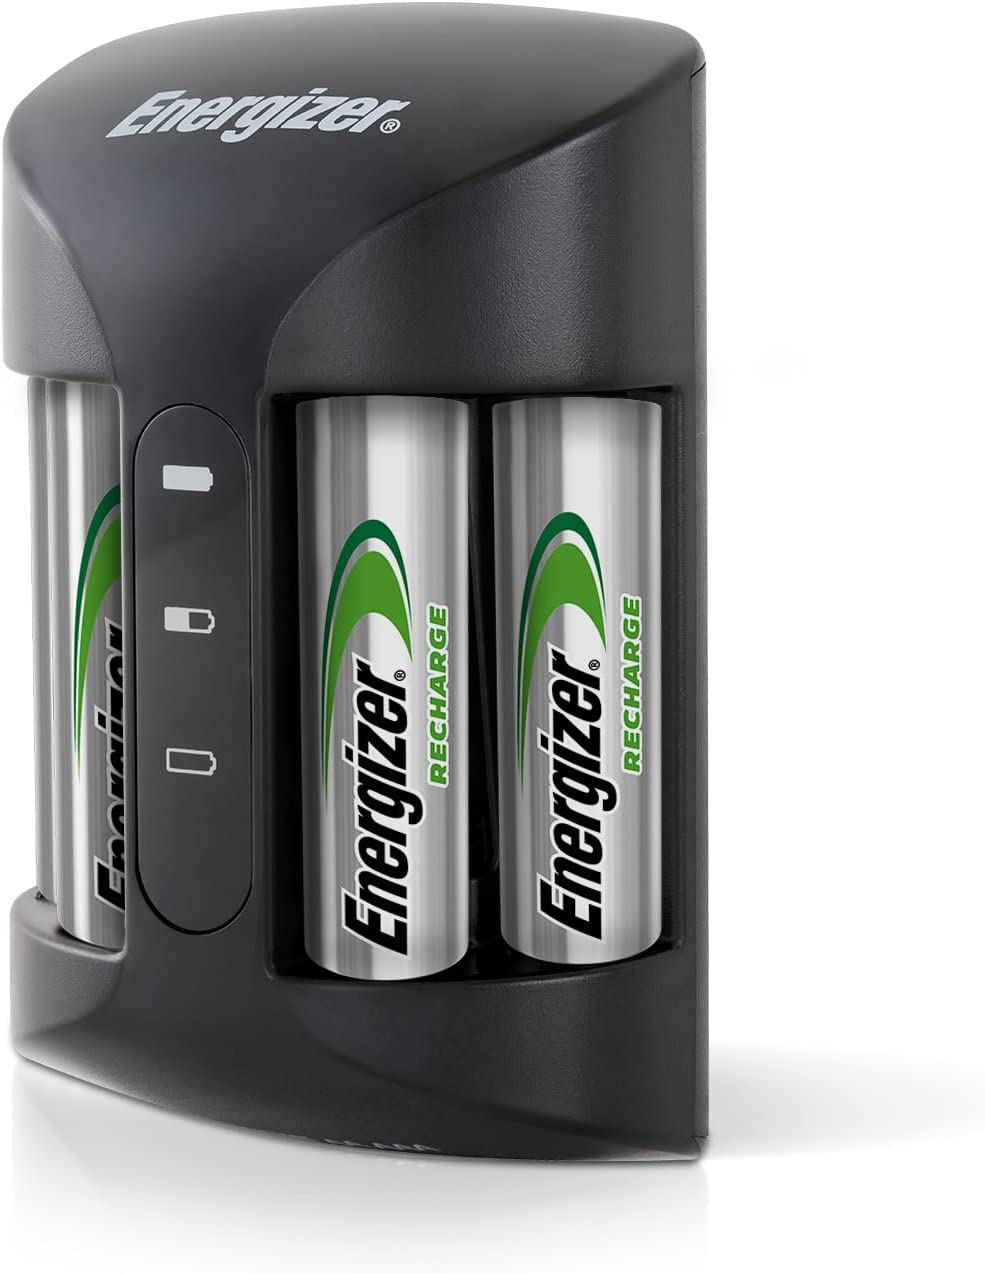  Rechargeable Batteries